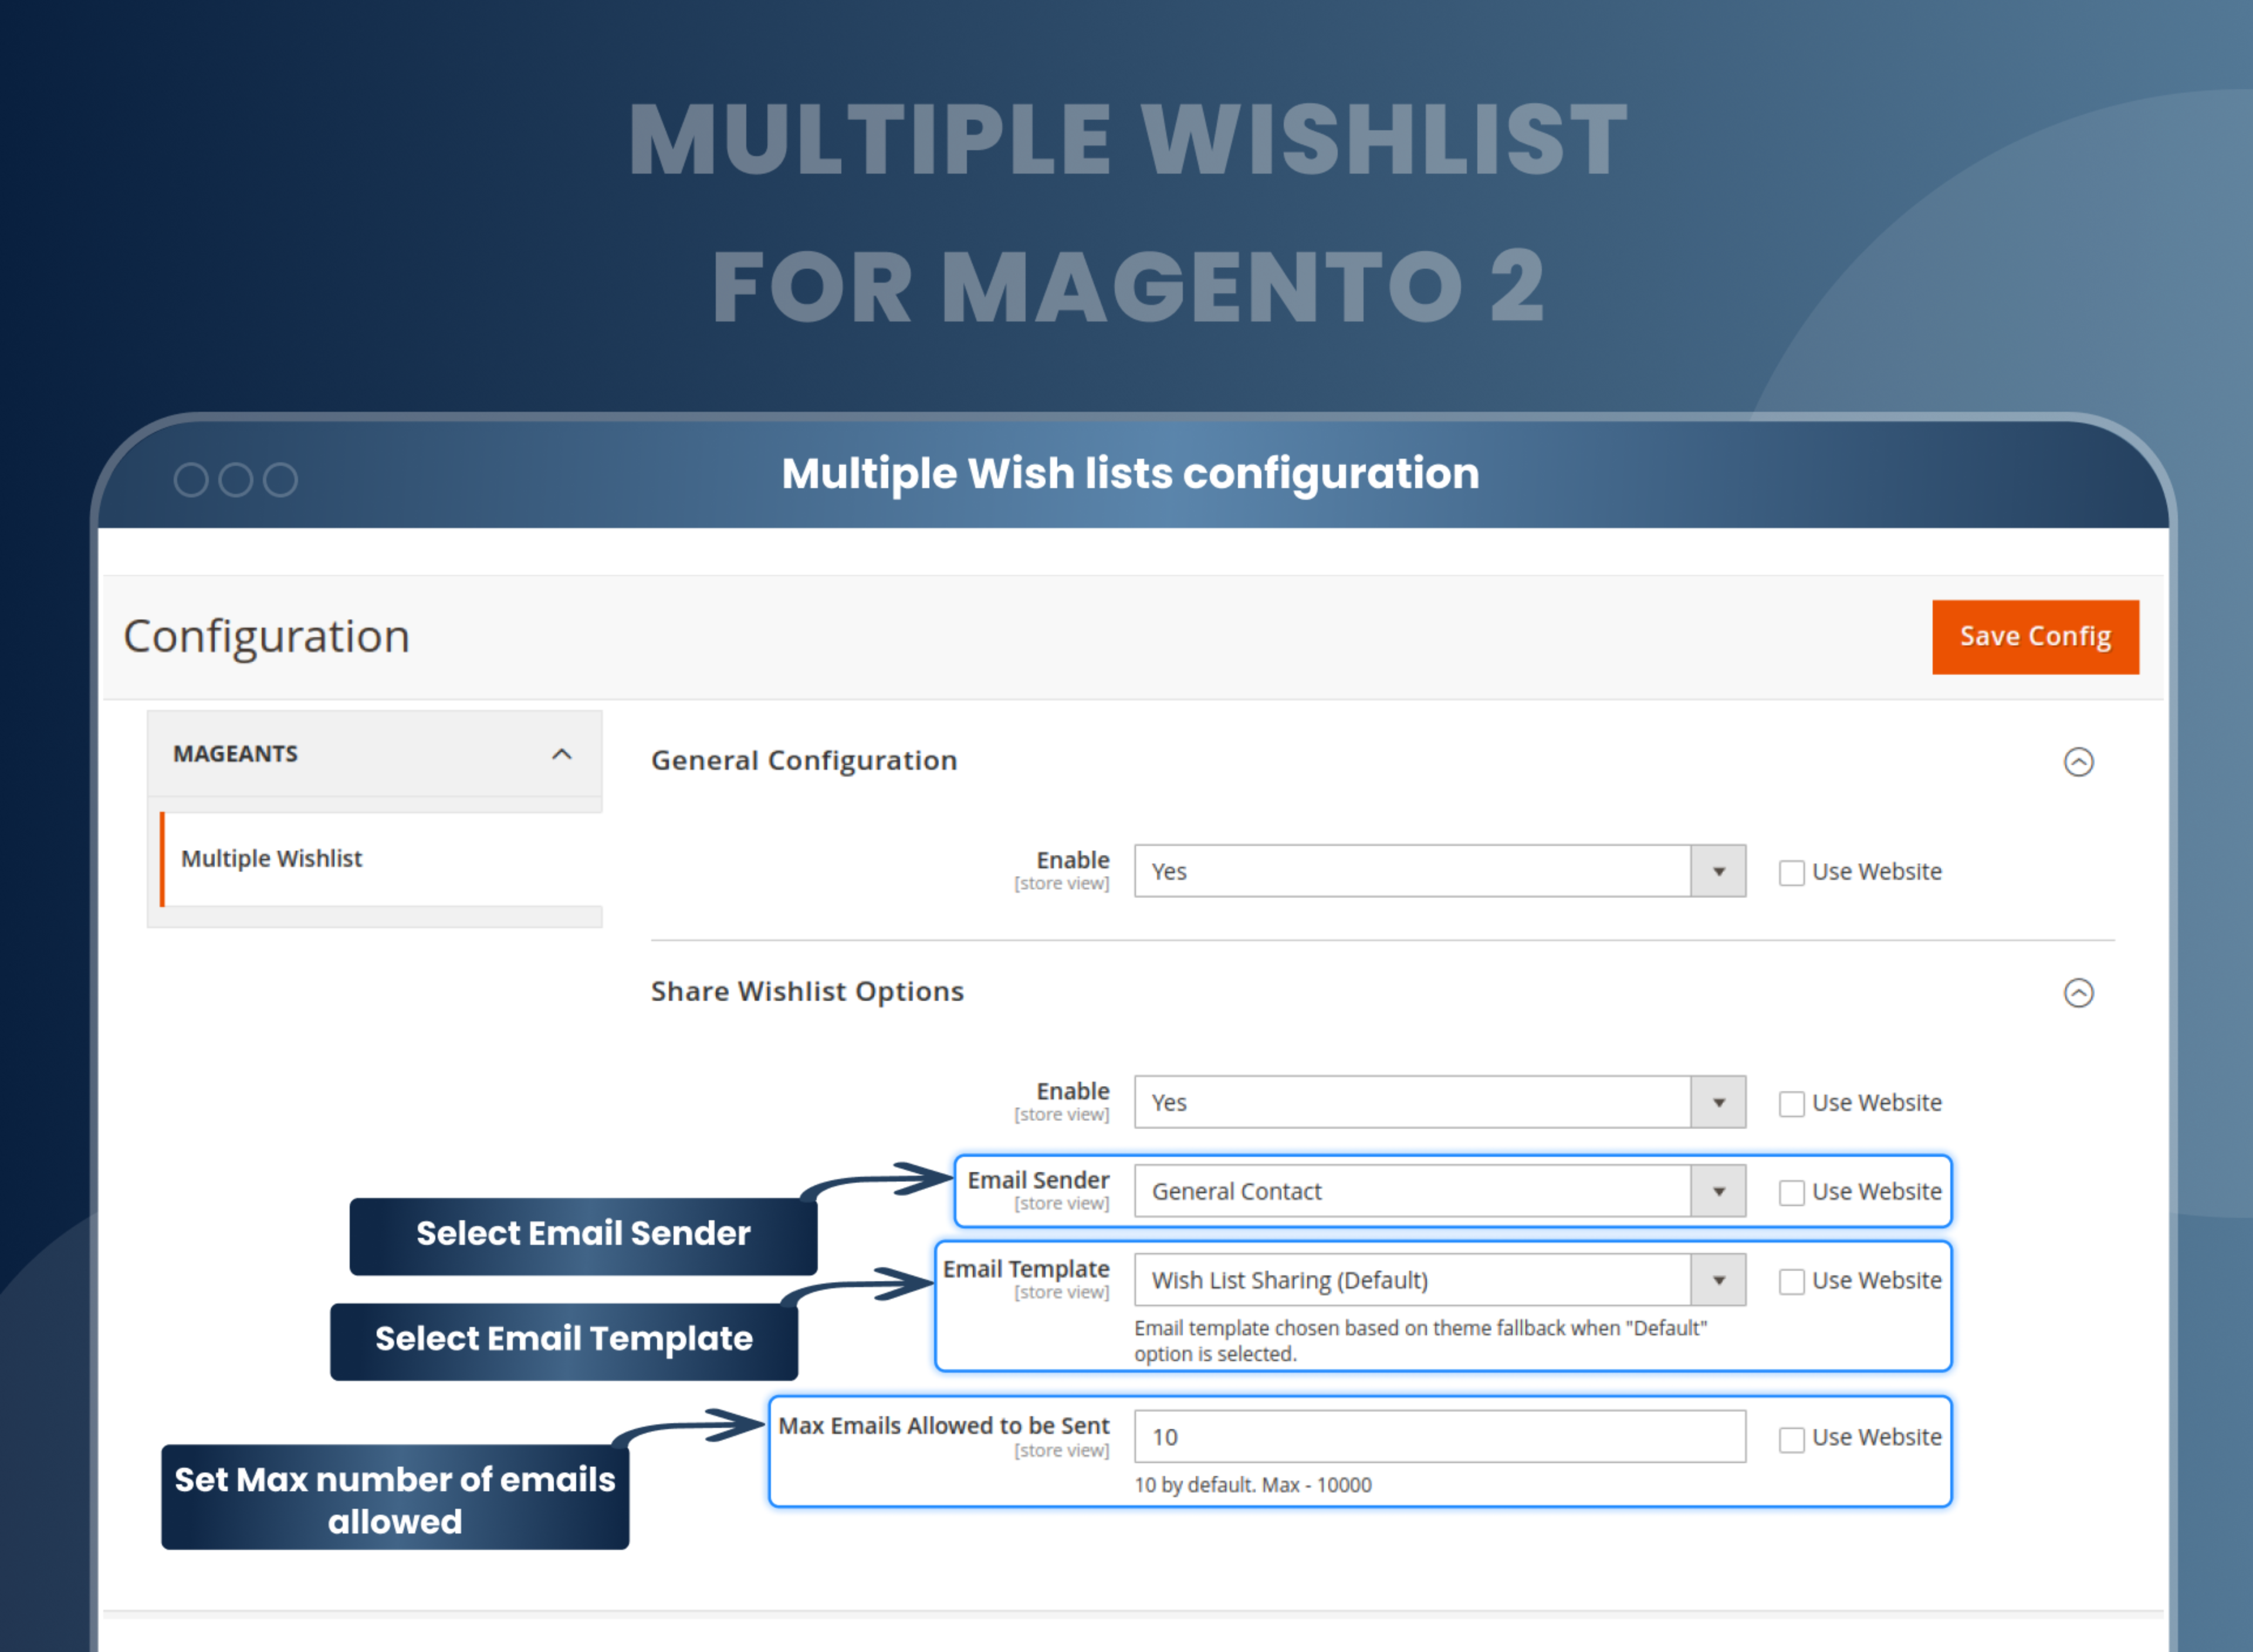 Multiple Wish lists configuration